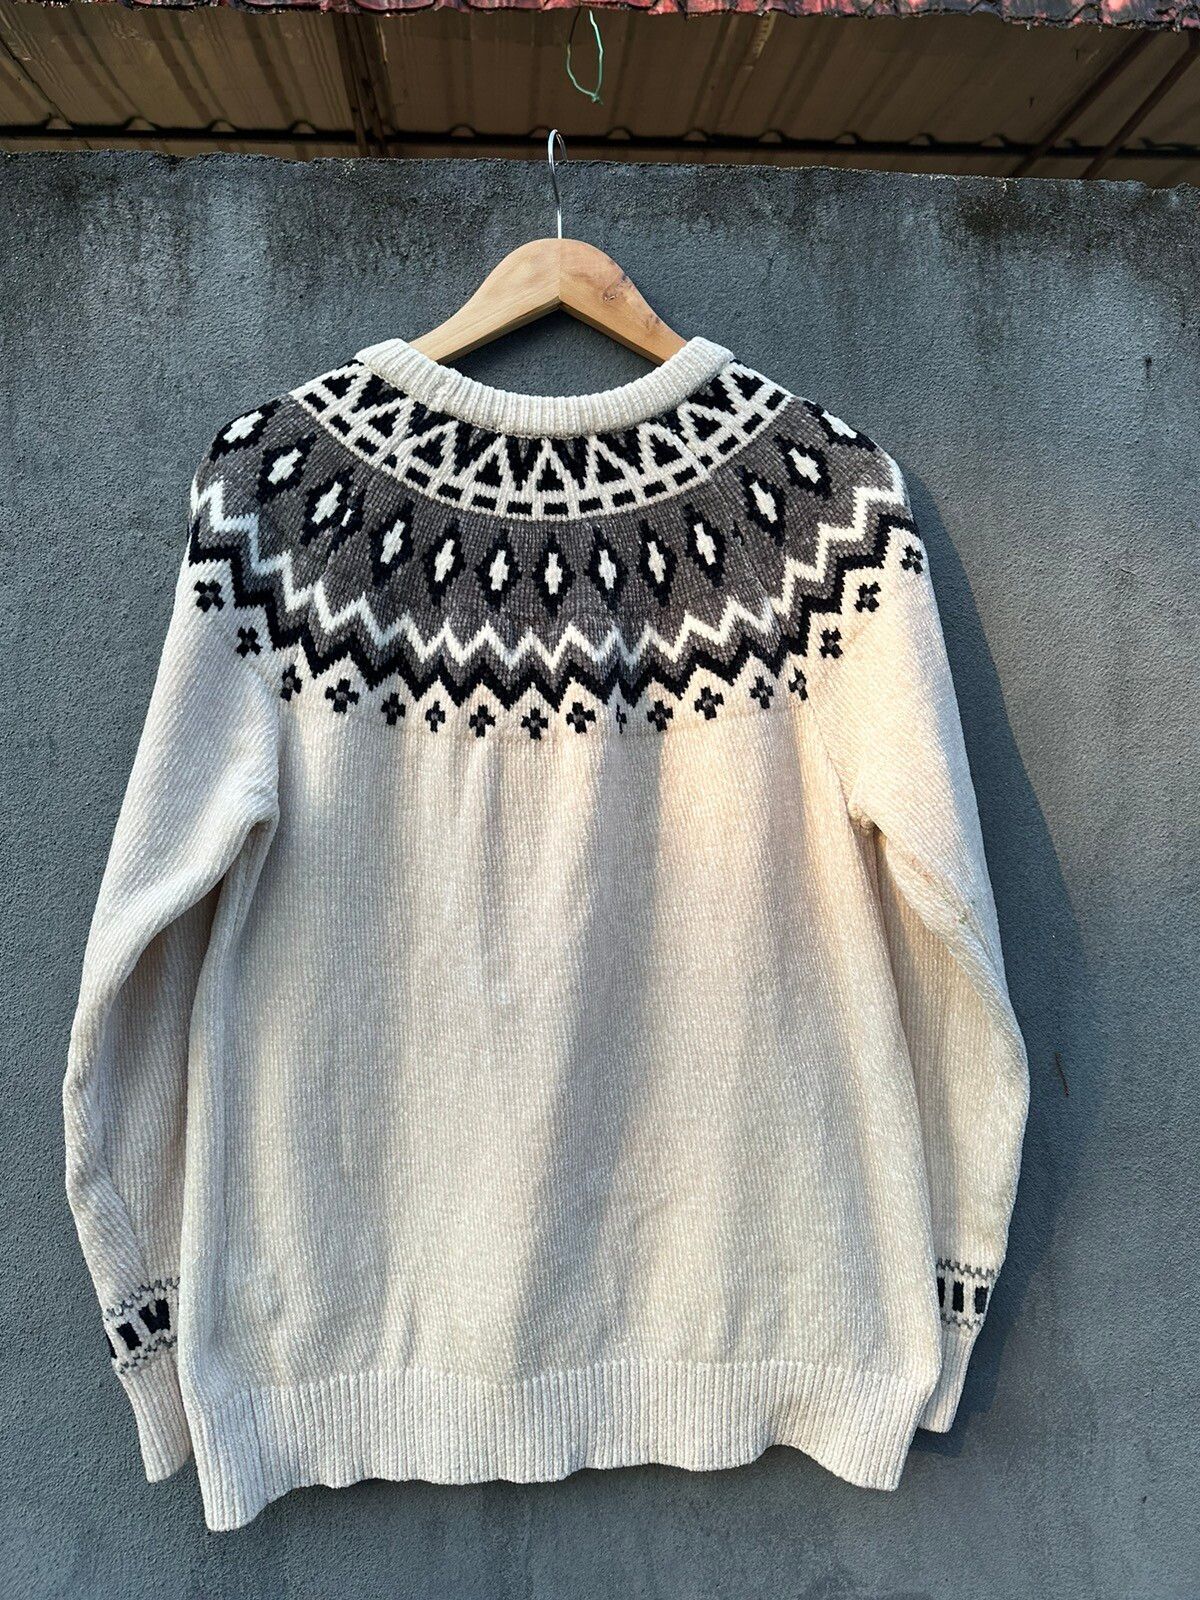 Japanese Brand Ikka Knitted Sweatshirt Size US M / EU 48-50 / 2 - 8 Thumbnail